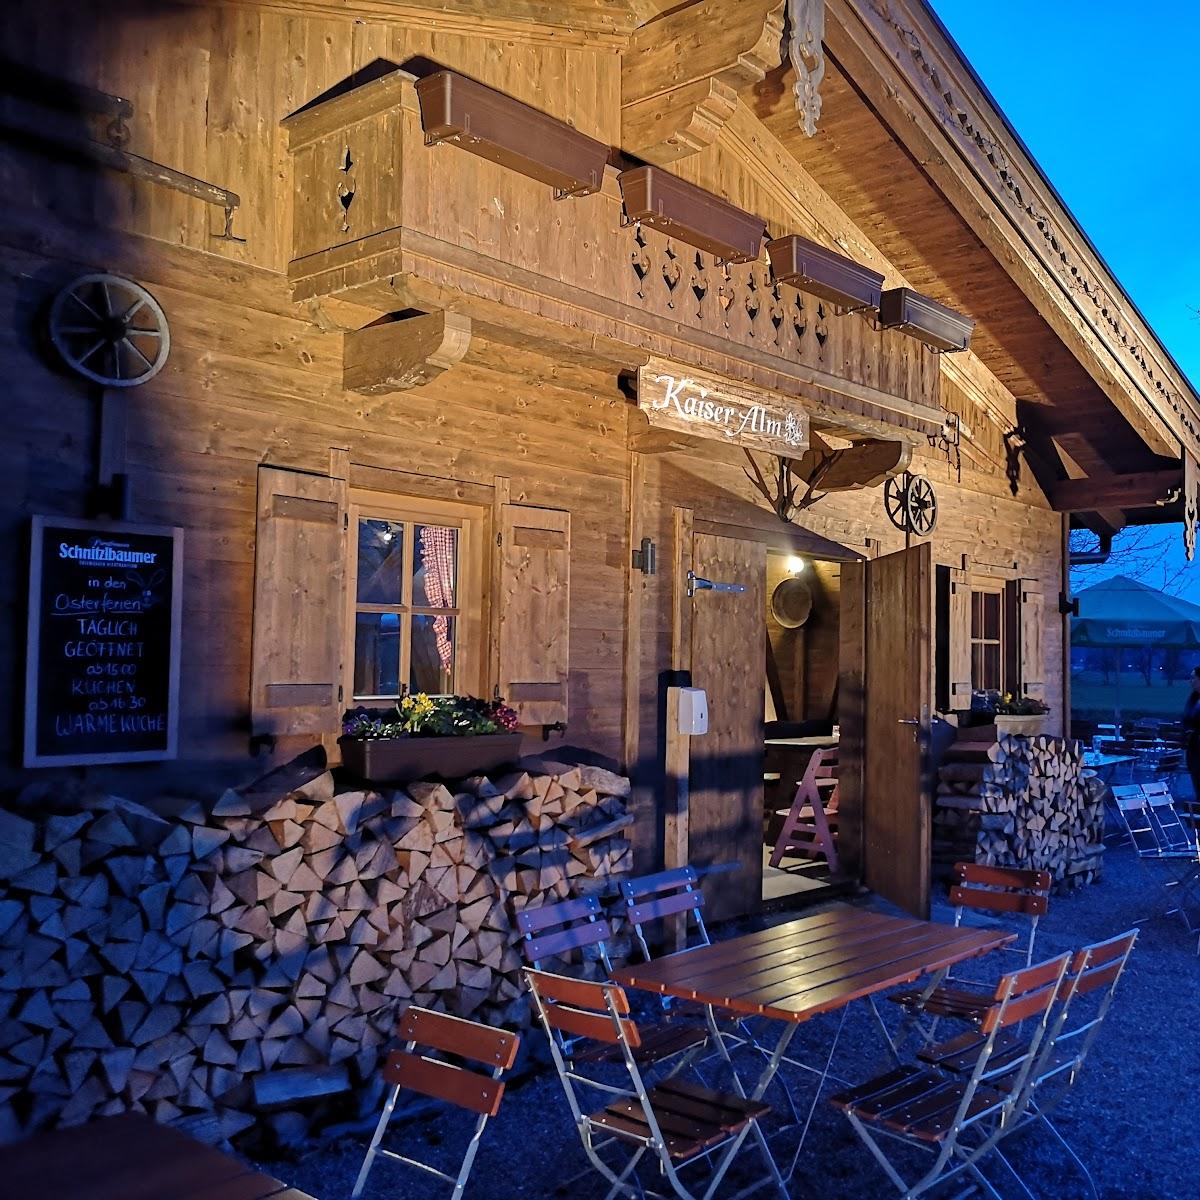 Restaurant "Kaiser-Alm" in Bad Feilnbach